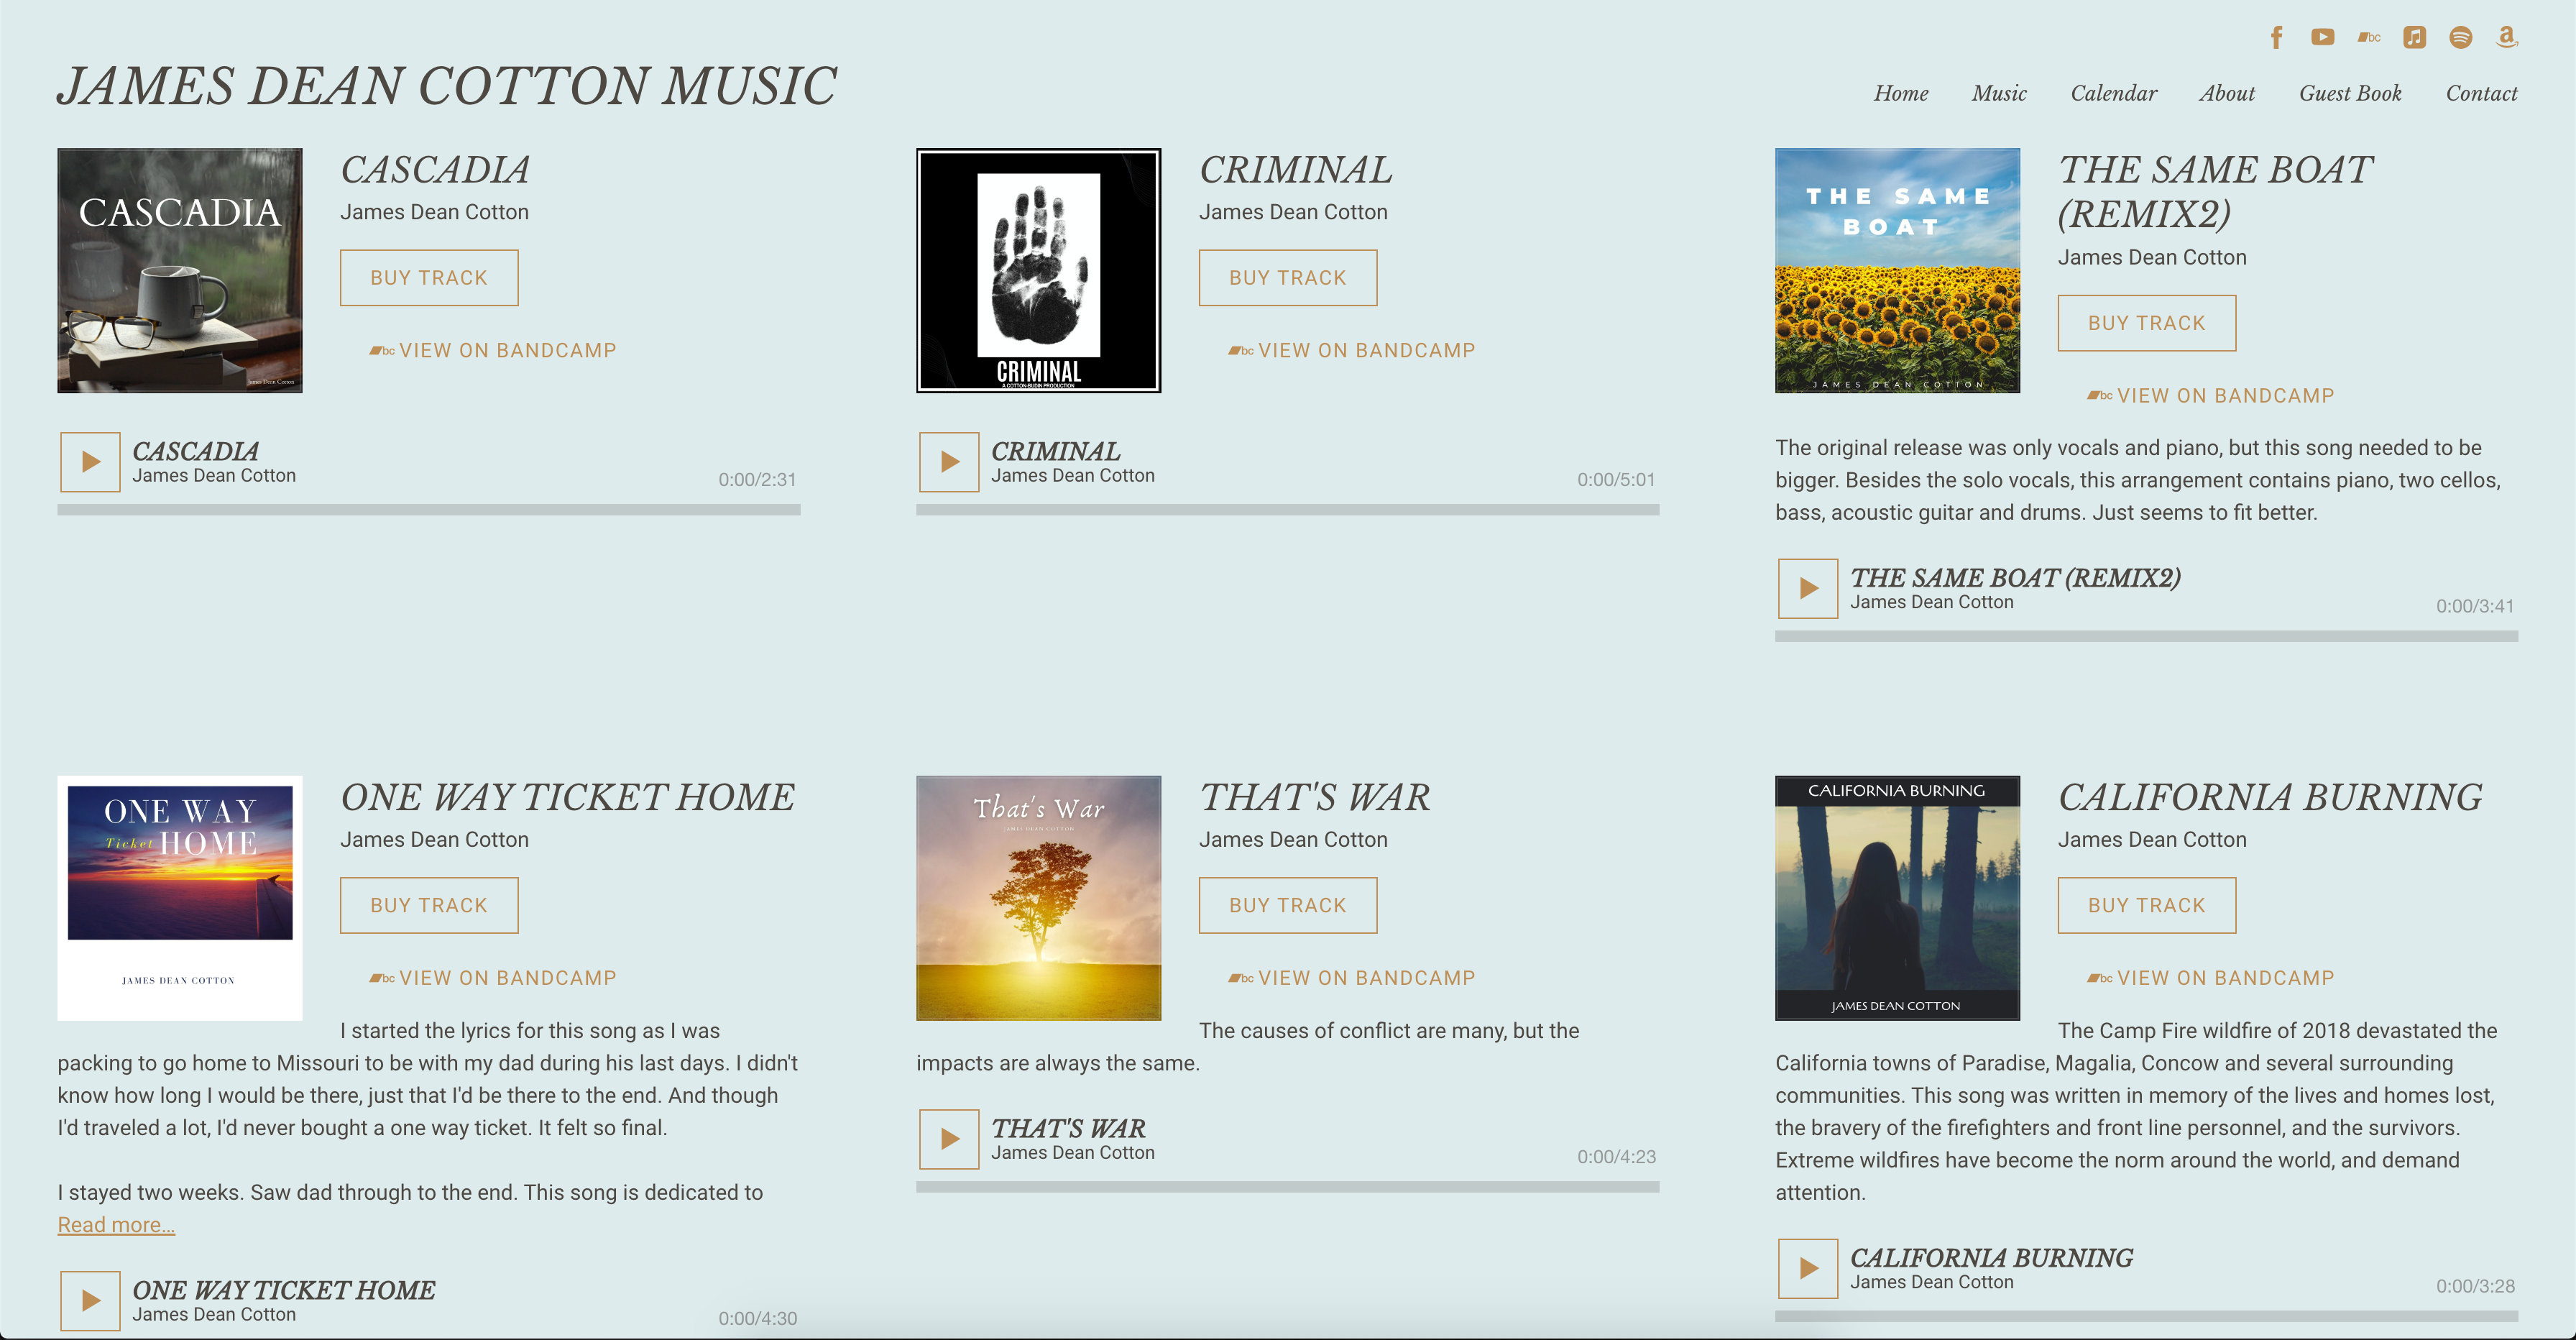 Screenshot from jamesdeancottonmusic.com/home#music, built using a Bandzoogle website template.